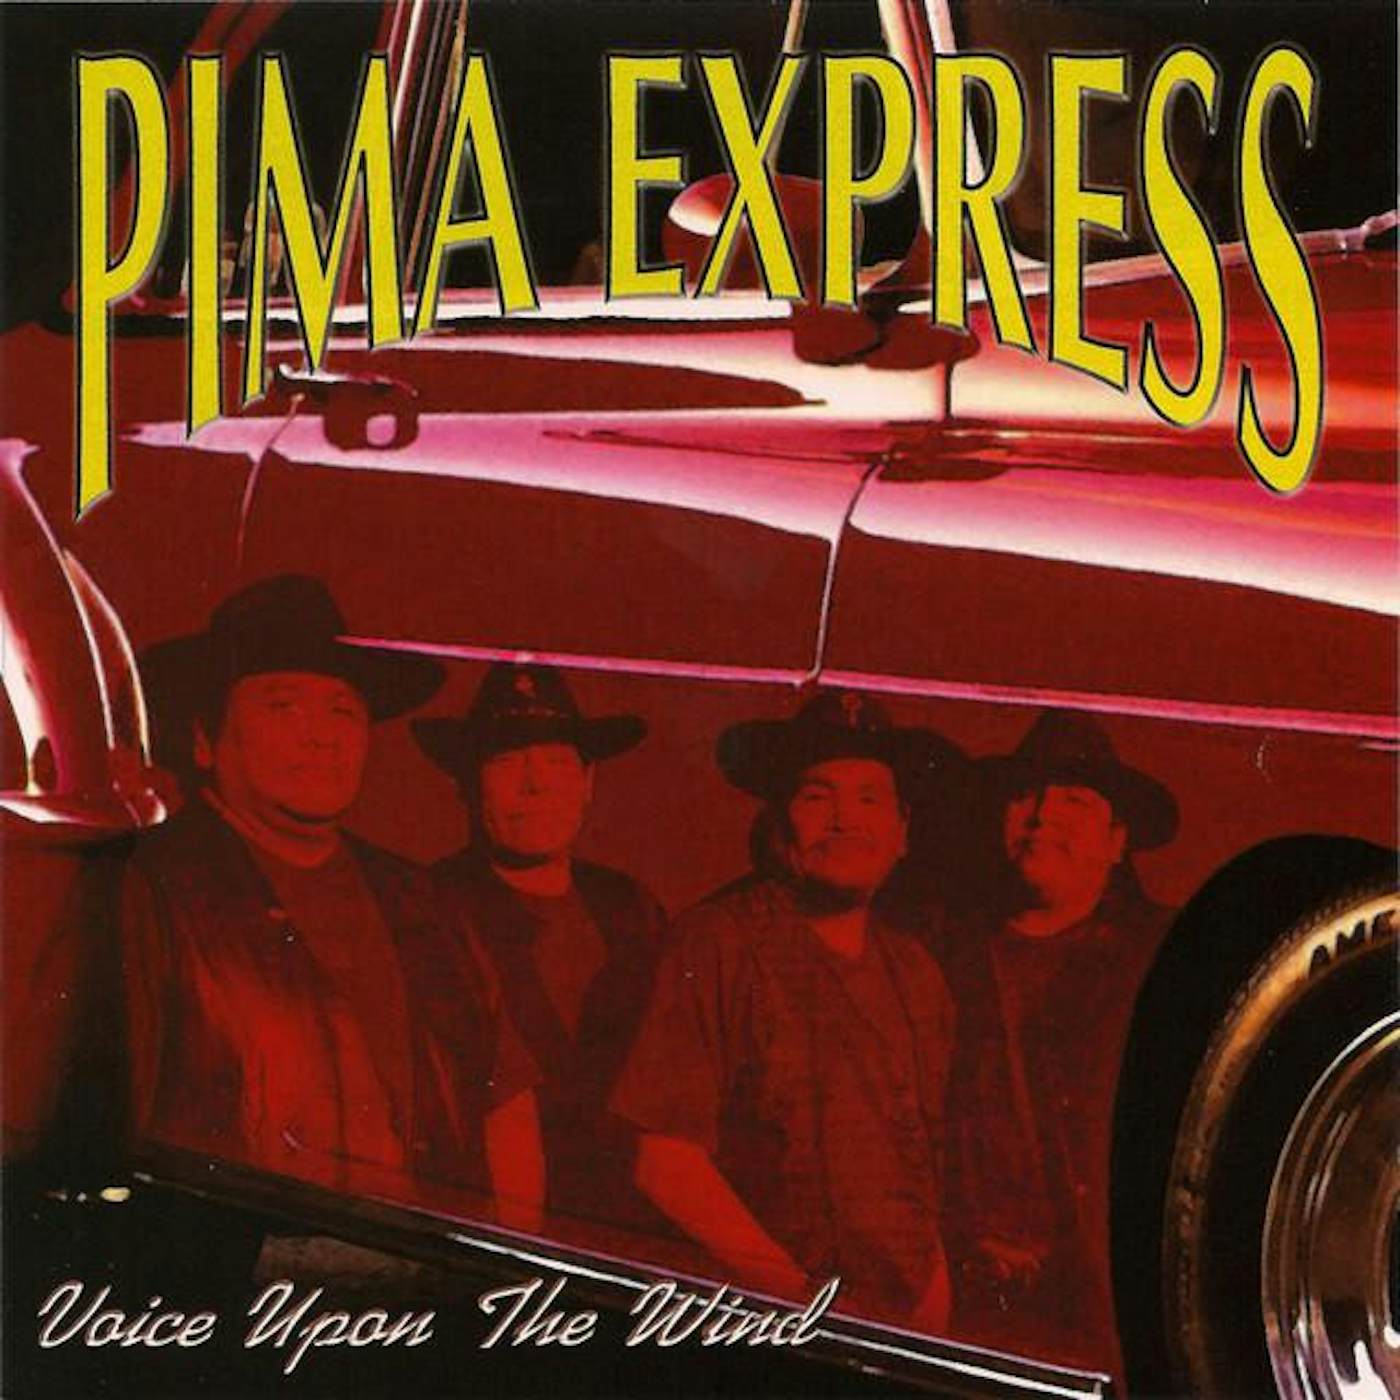 Pima Express